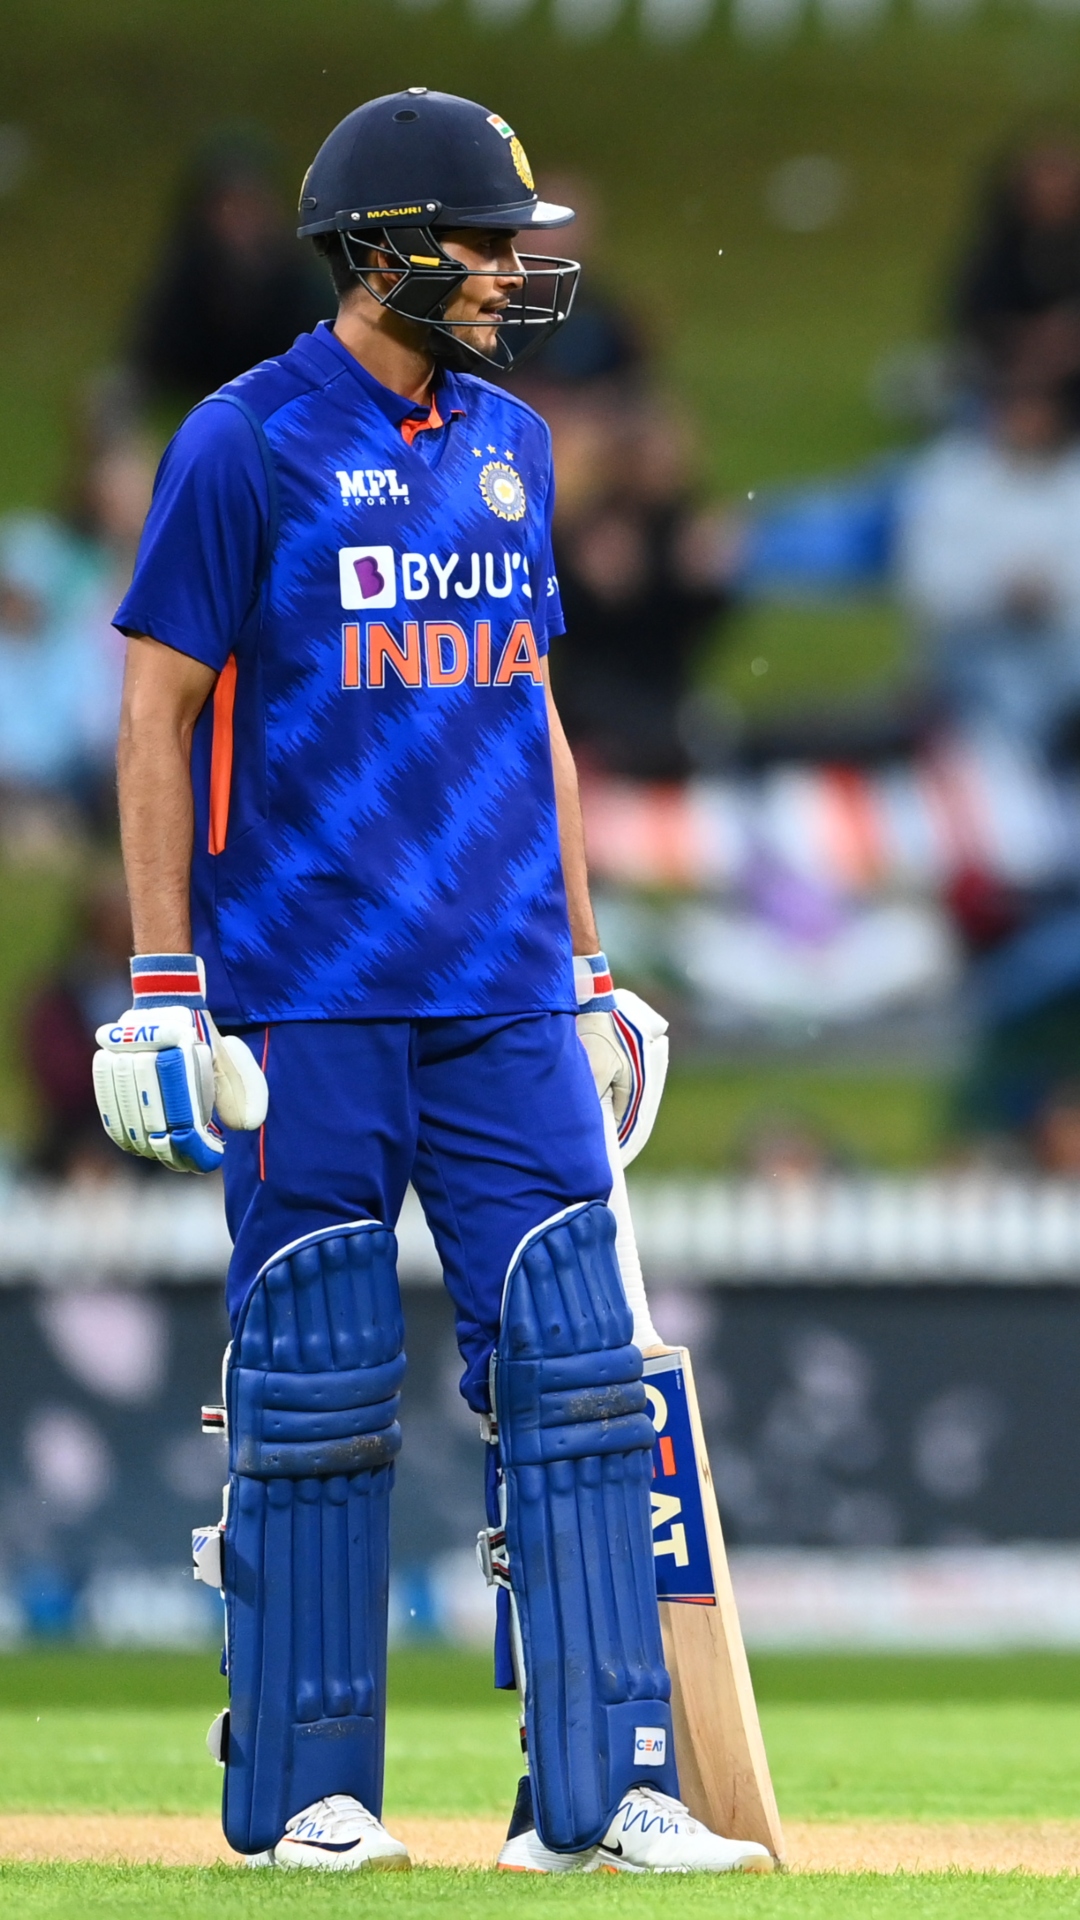 IND vs NZ 3rd ODI: Team India's ODI scores while batting first in last five games